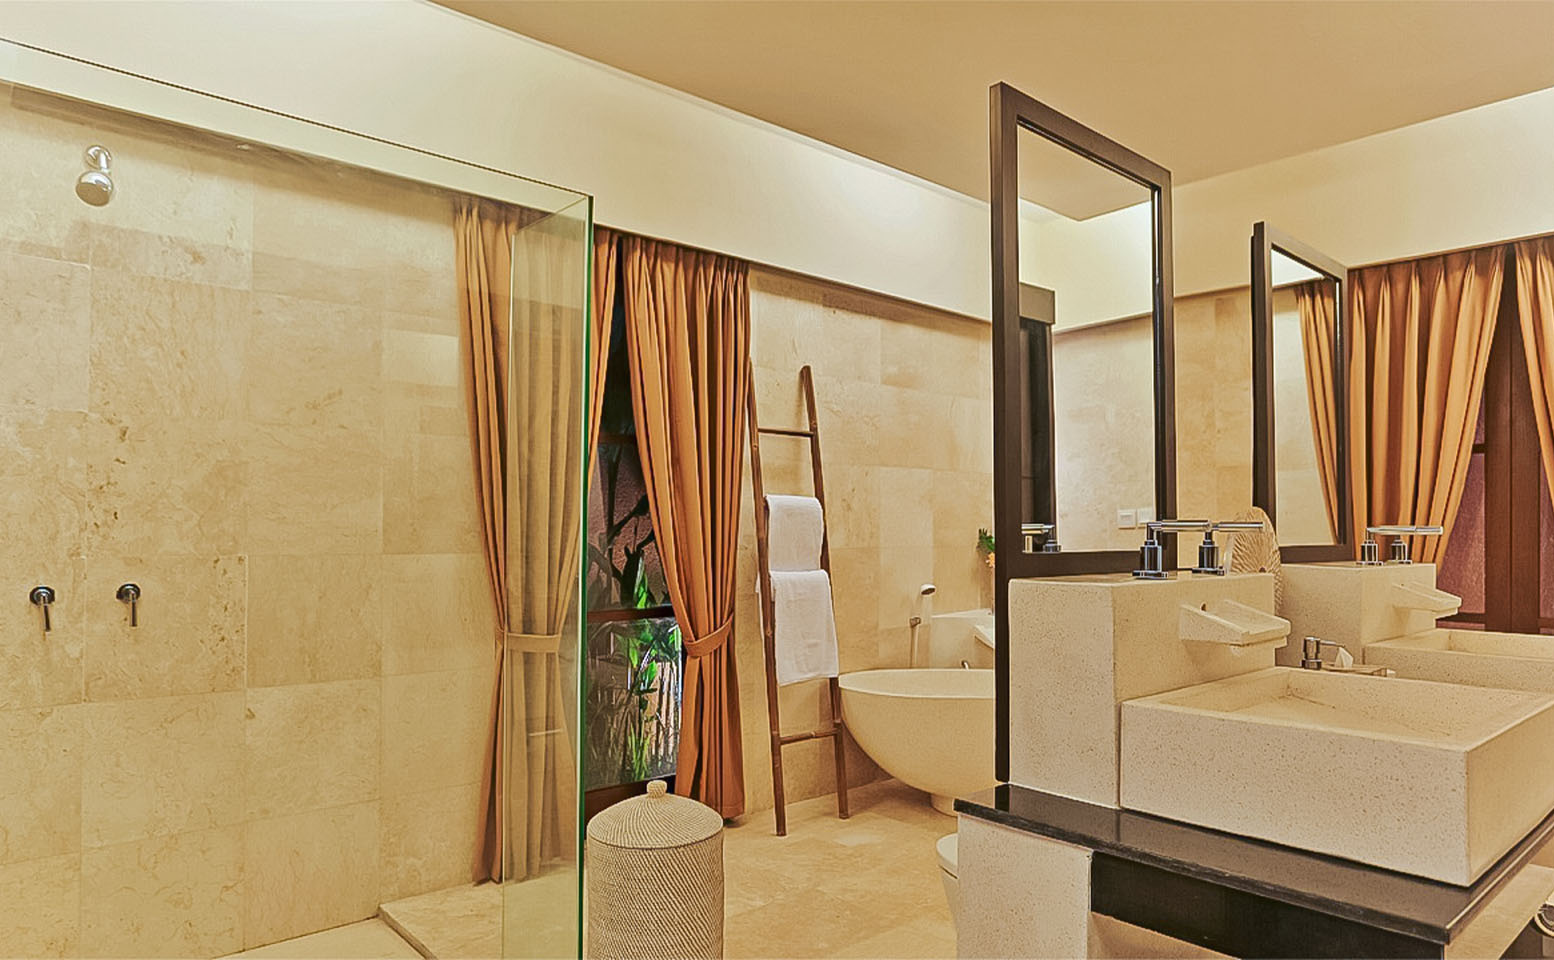 Kumuda Villa - Master bathroom with bathub, 2 sinks and 2 mirror